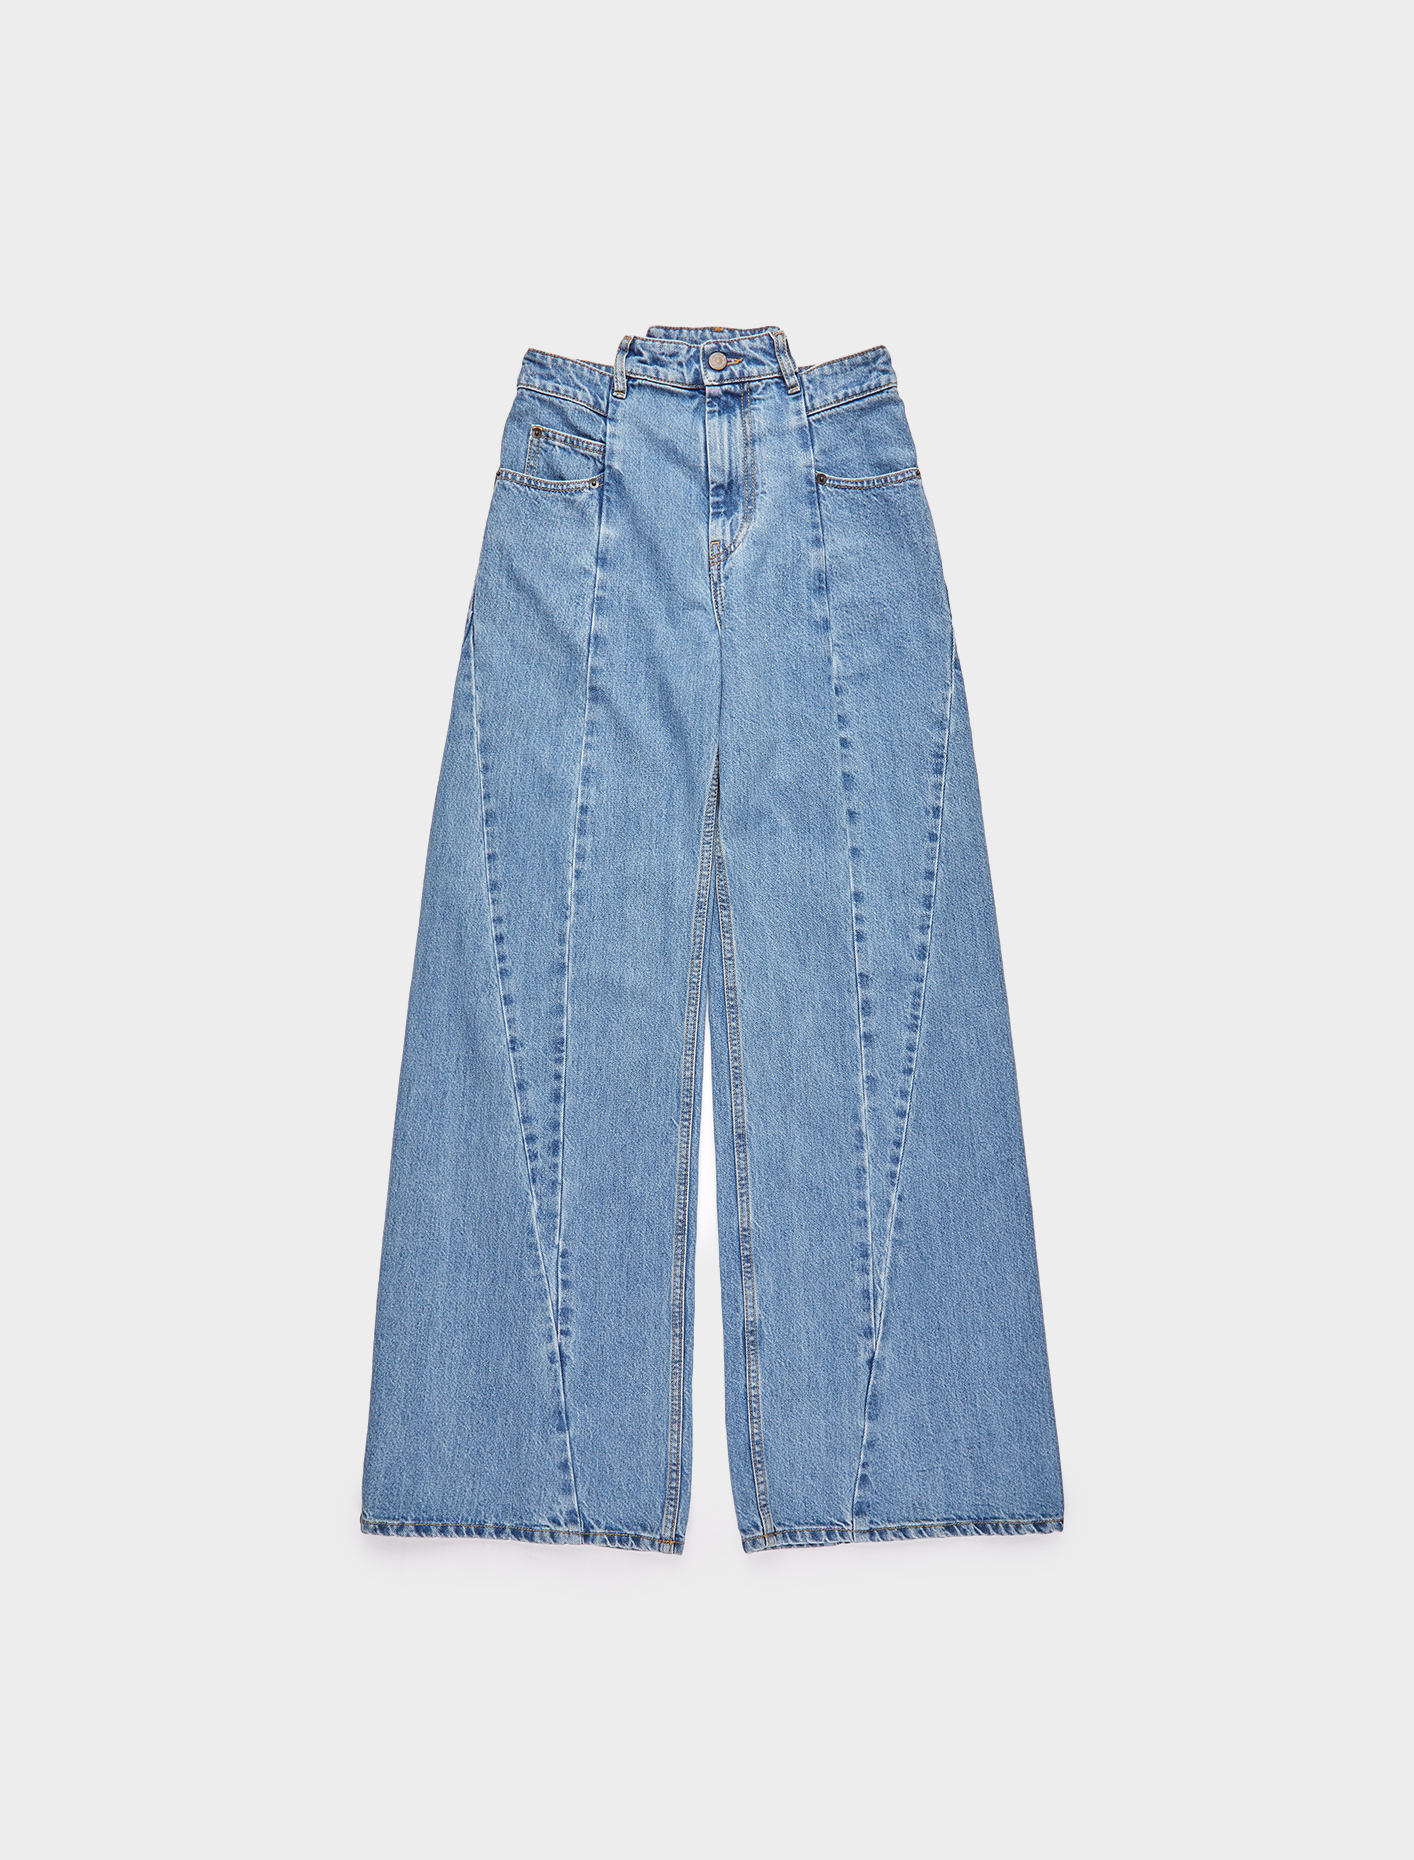 Maison Margiela Panel Jeans in Medium Blue Stone Wash | Voo Store 